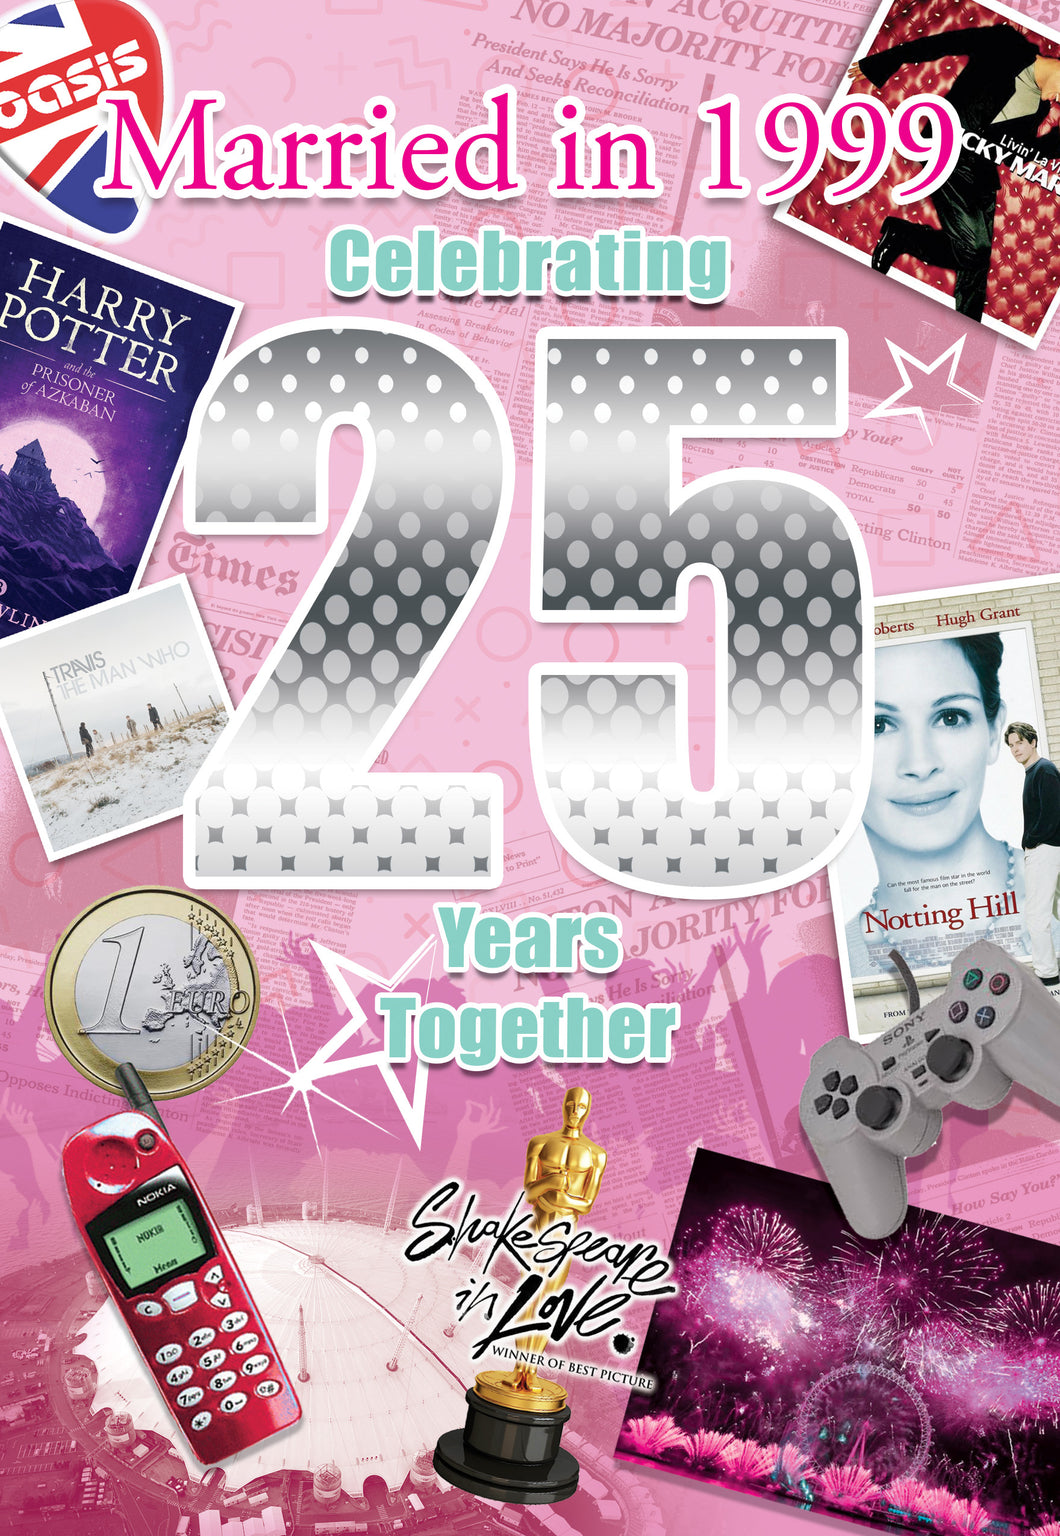 Silver Anniversary 25 Years